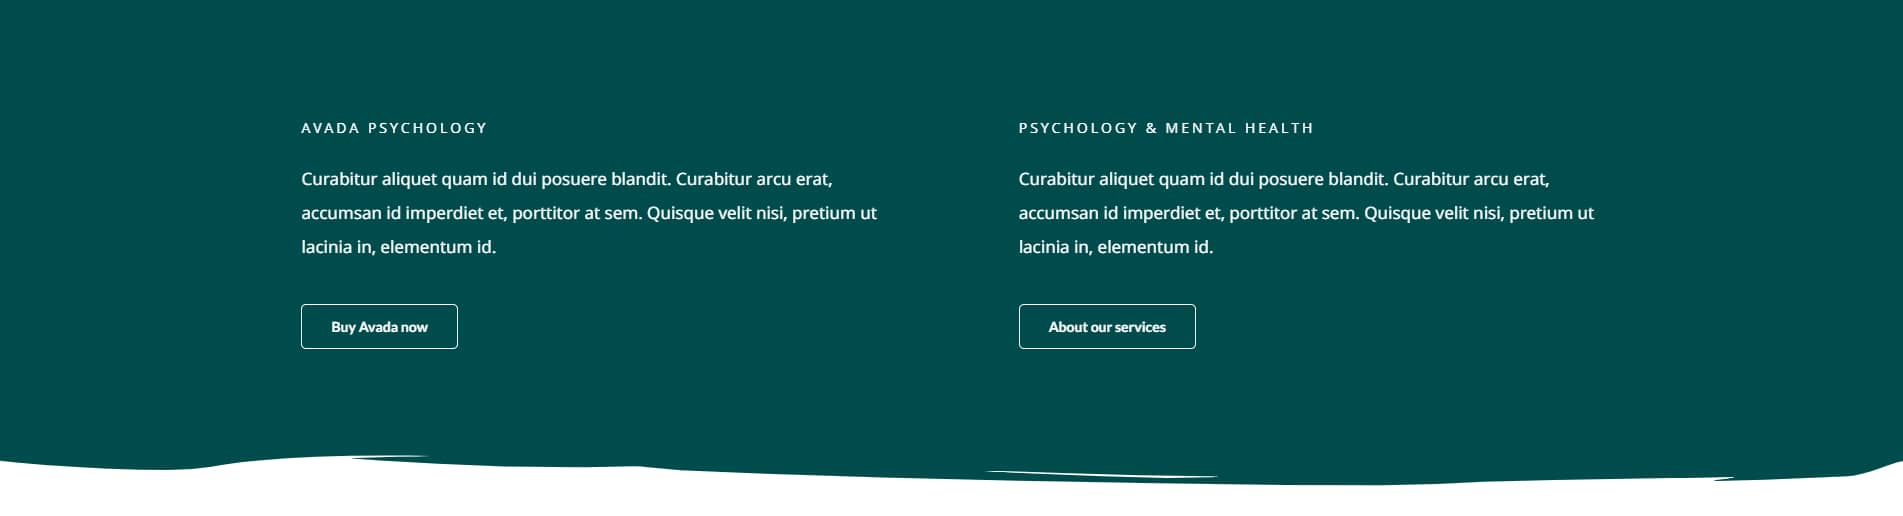 Avada Psychology More Information CTA